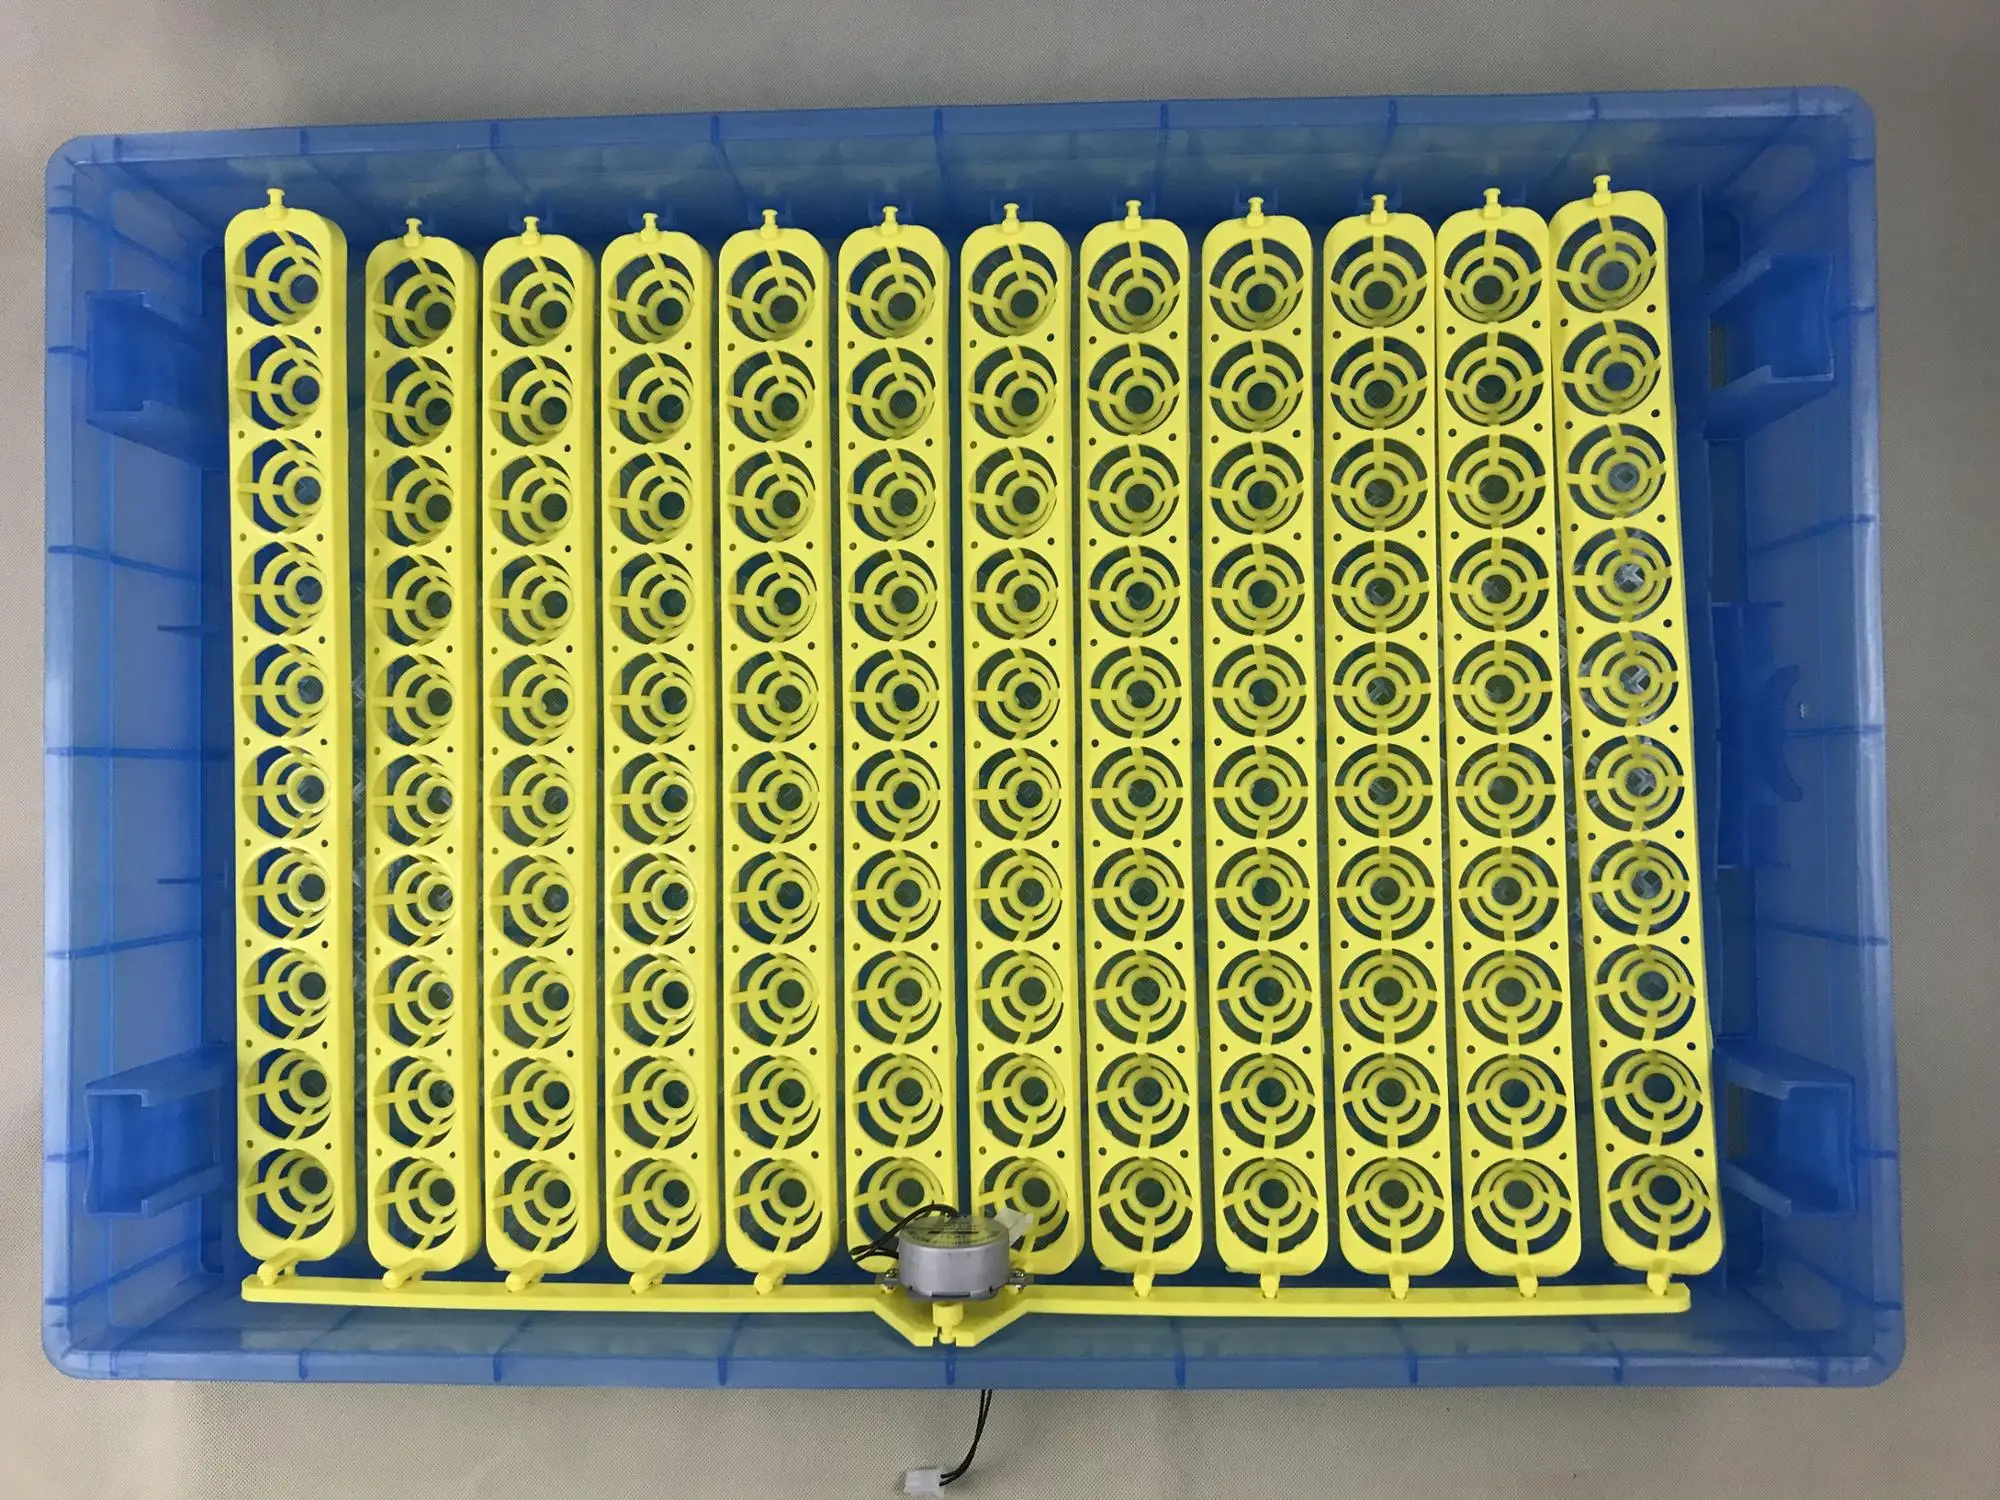 incubator egg trays philippines